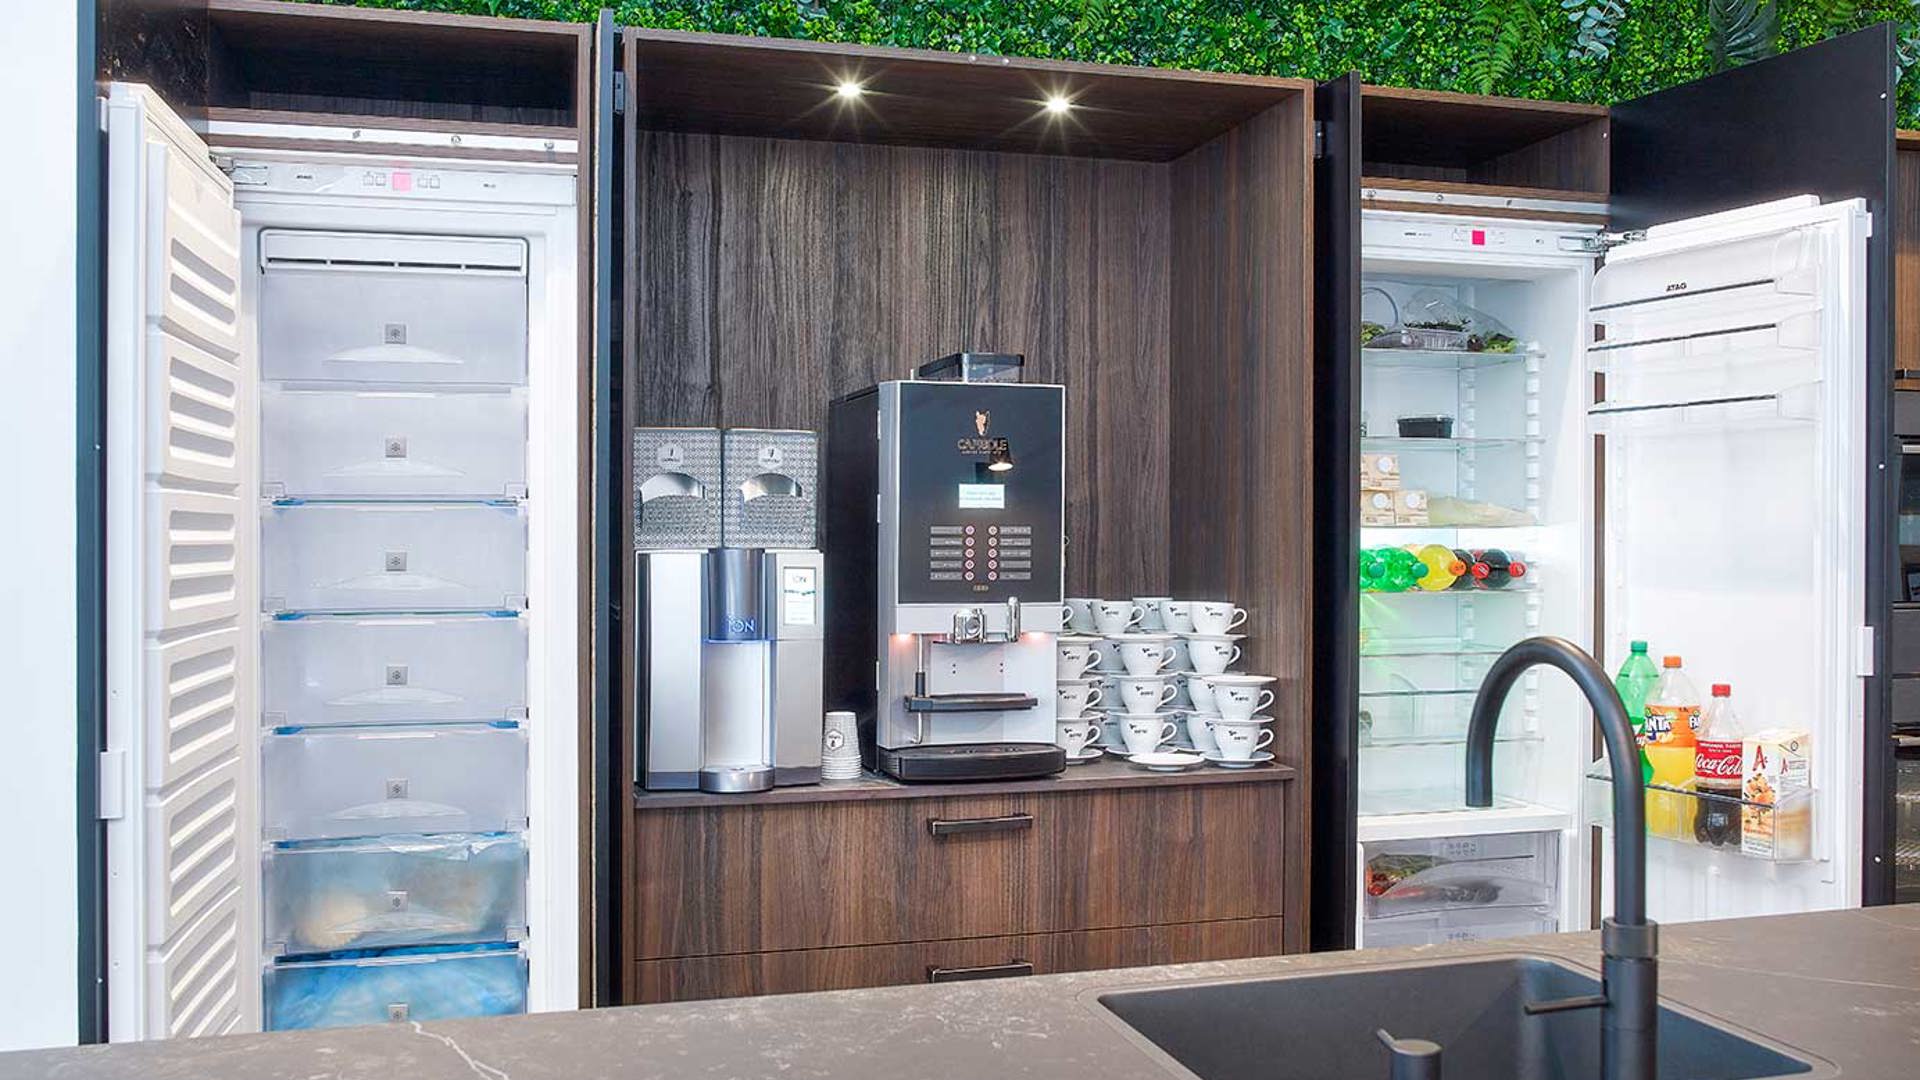 Design eilandkeuken met kastenwand, koffiecorner, koelkast en vriezer